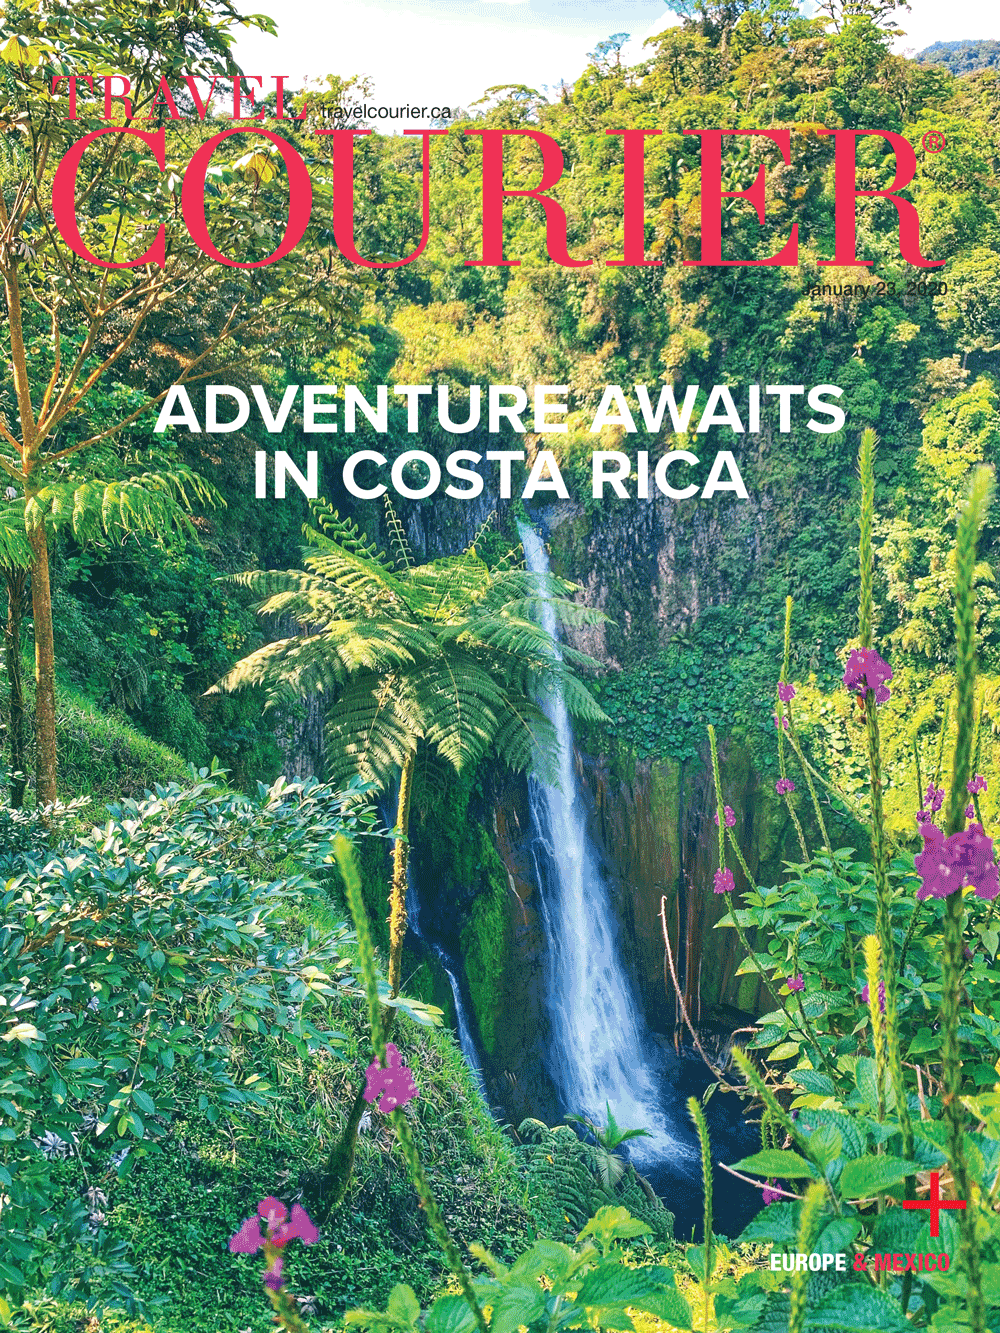 Adventure awaits in Costa Rica